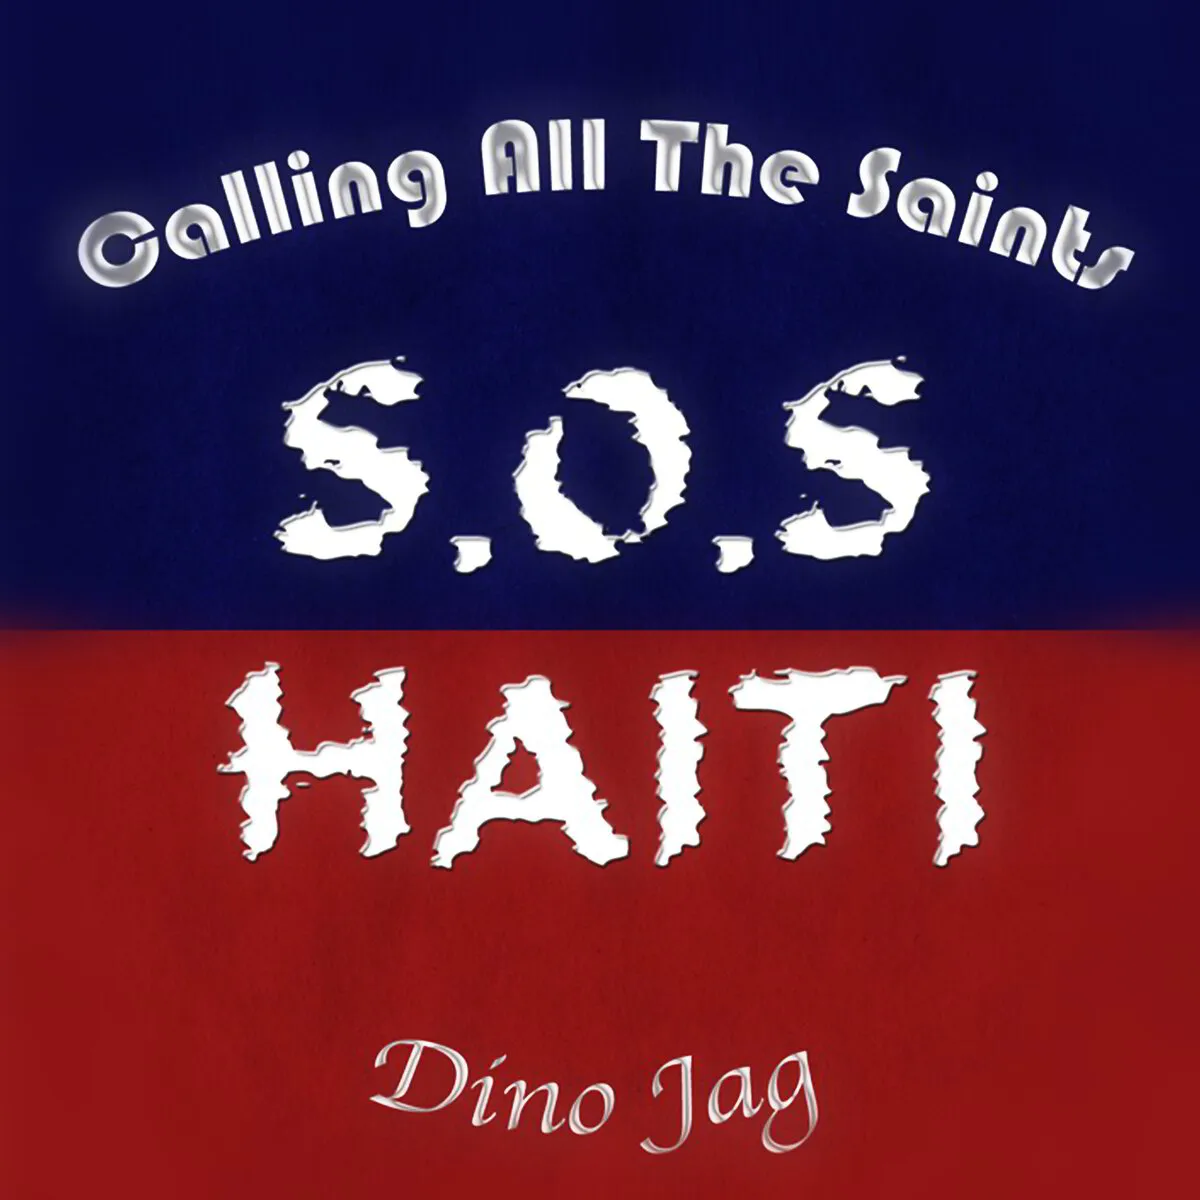 Calling All The Saints - Single (Digital Download)